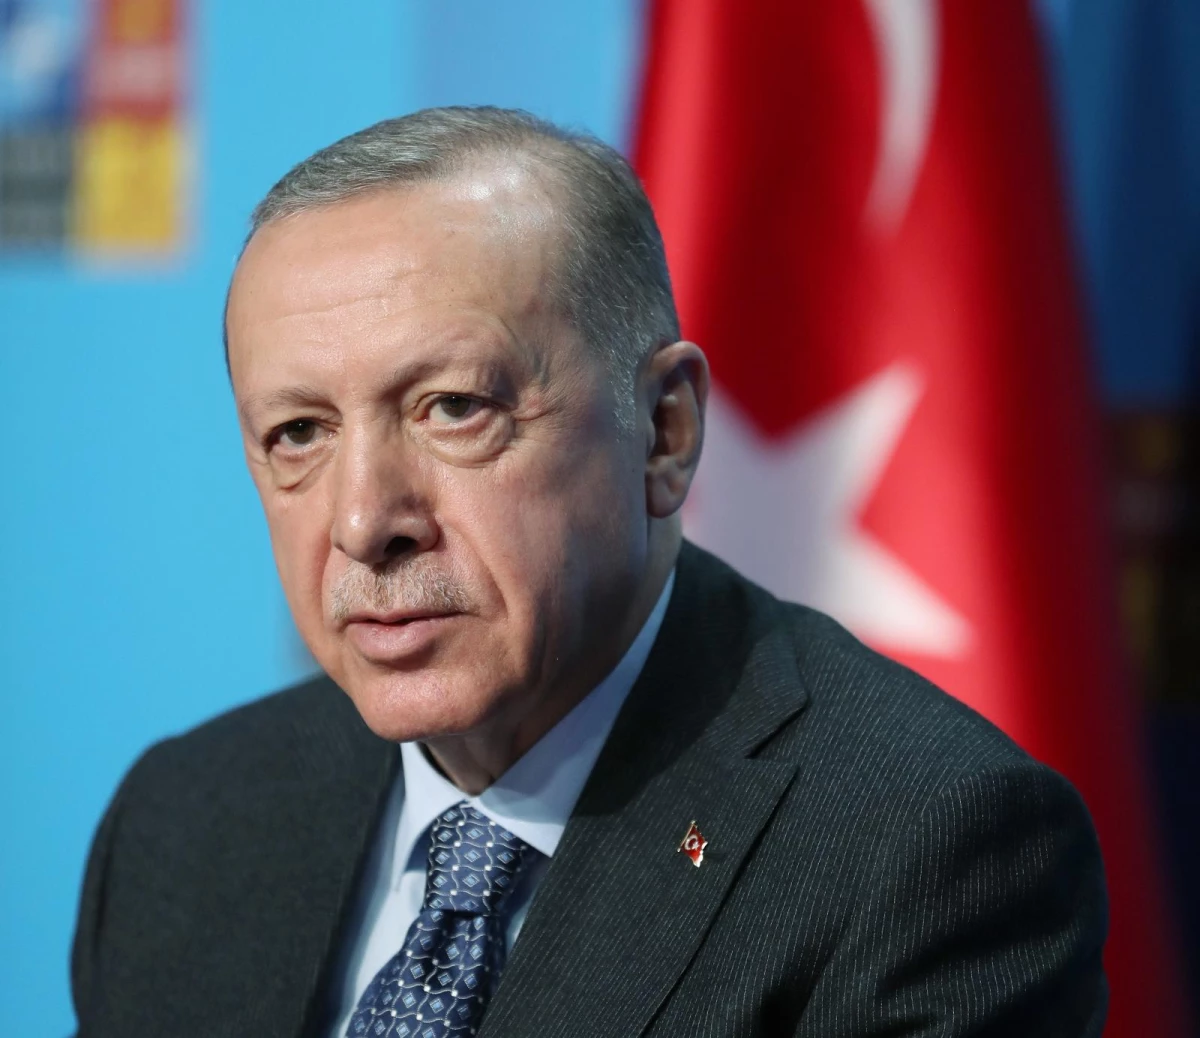 Cumhurbaşkanı Erdoğan: "İsveç 73 kişinin iadesinin sözünü verdi"